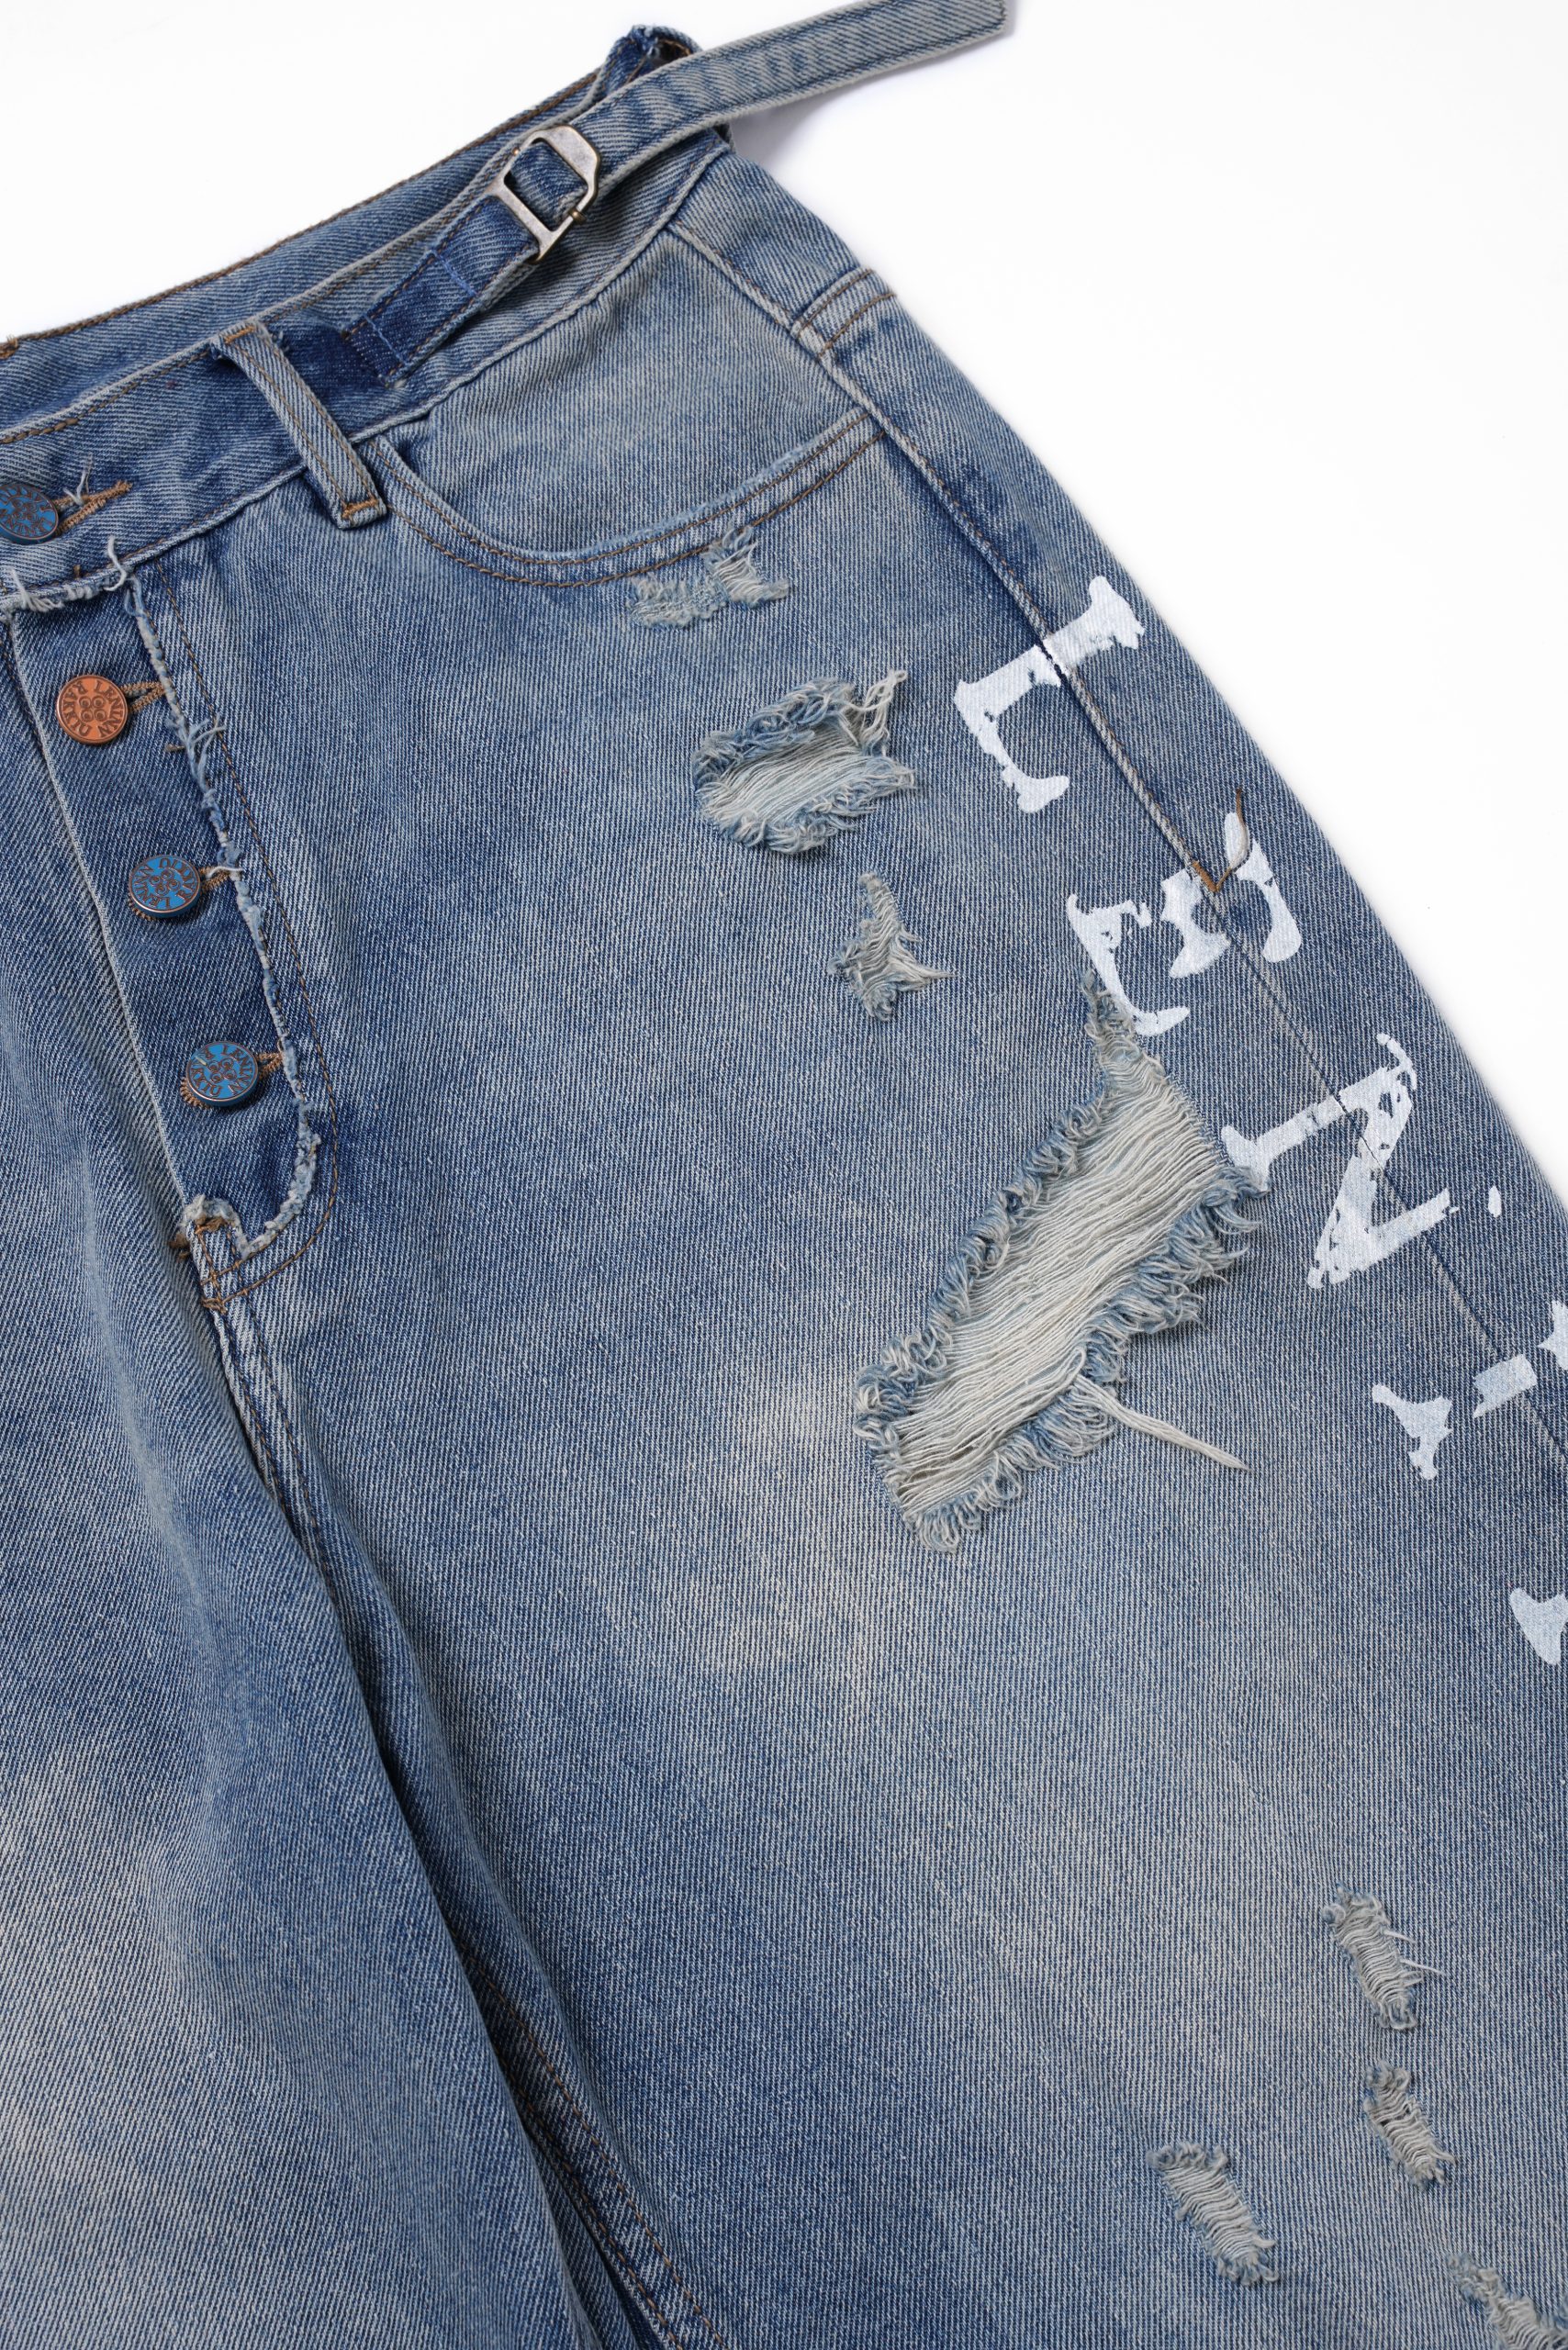 4-HOLE PUNCHER Blue Denim Jeans - RAKKIU